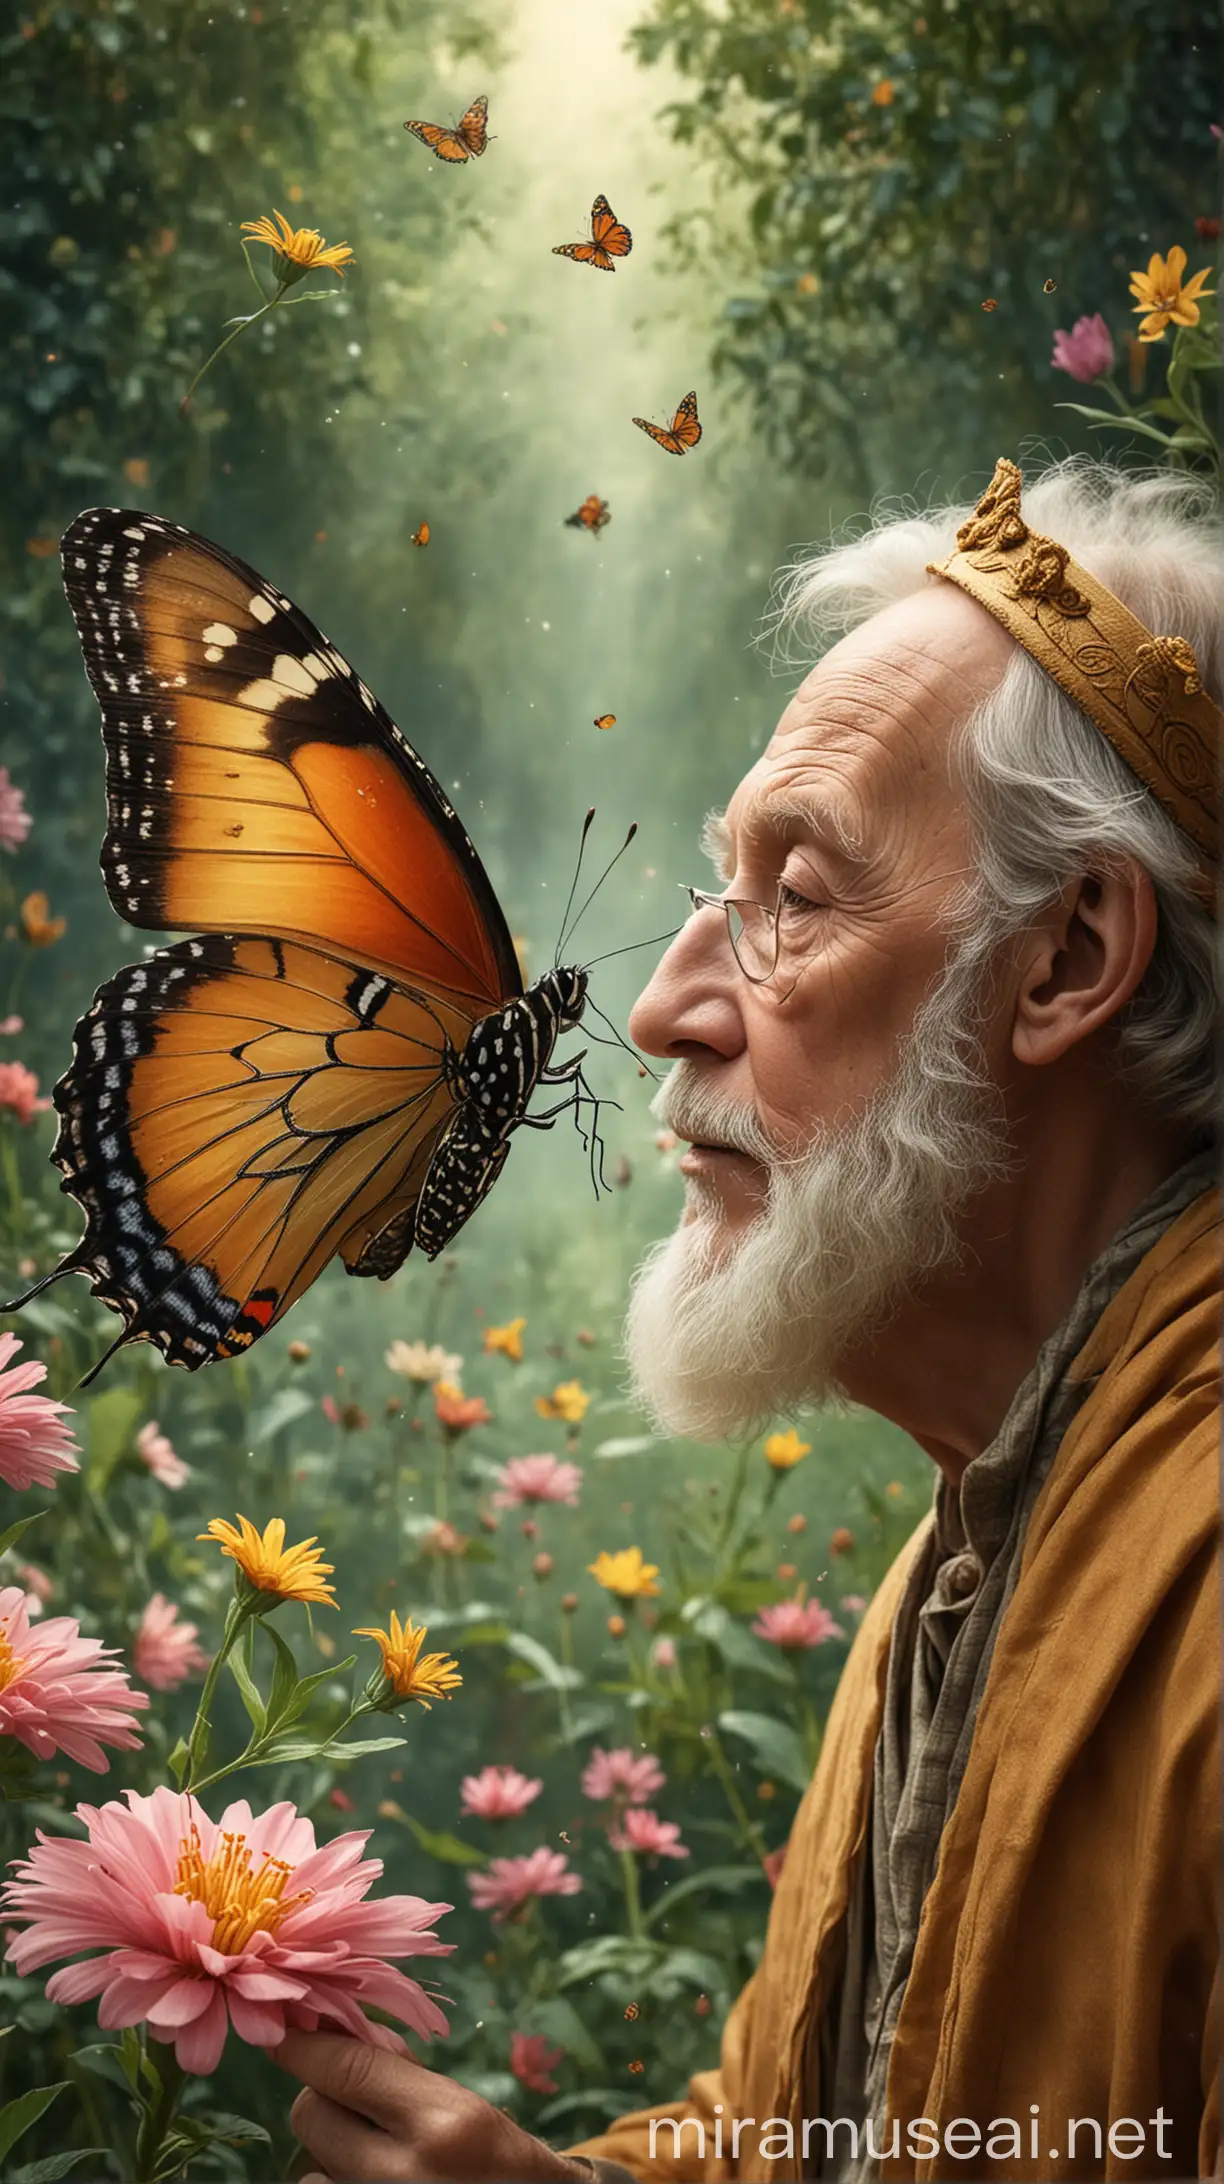 Wisdom Encounter Serene Butterfly and Flower